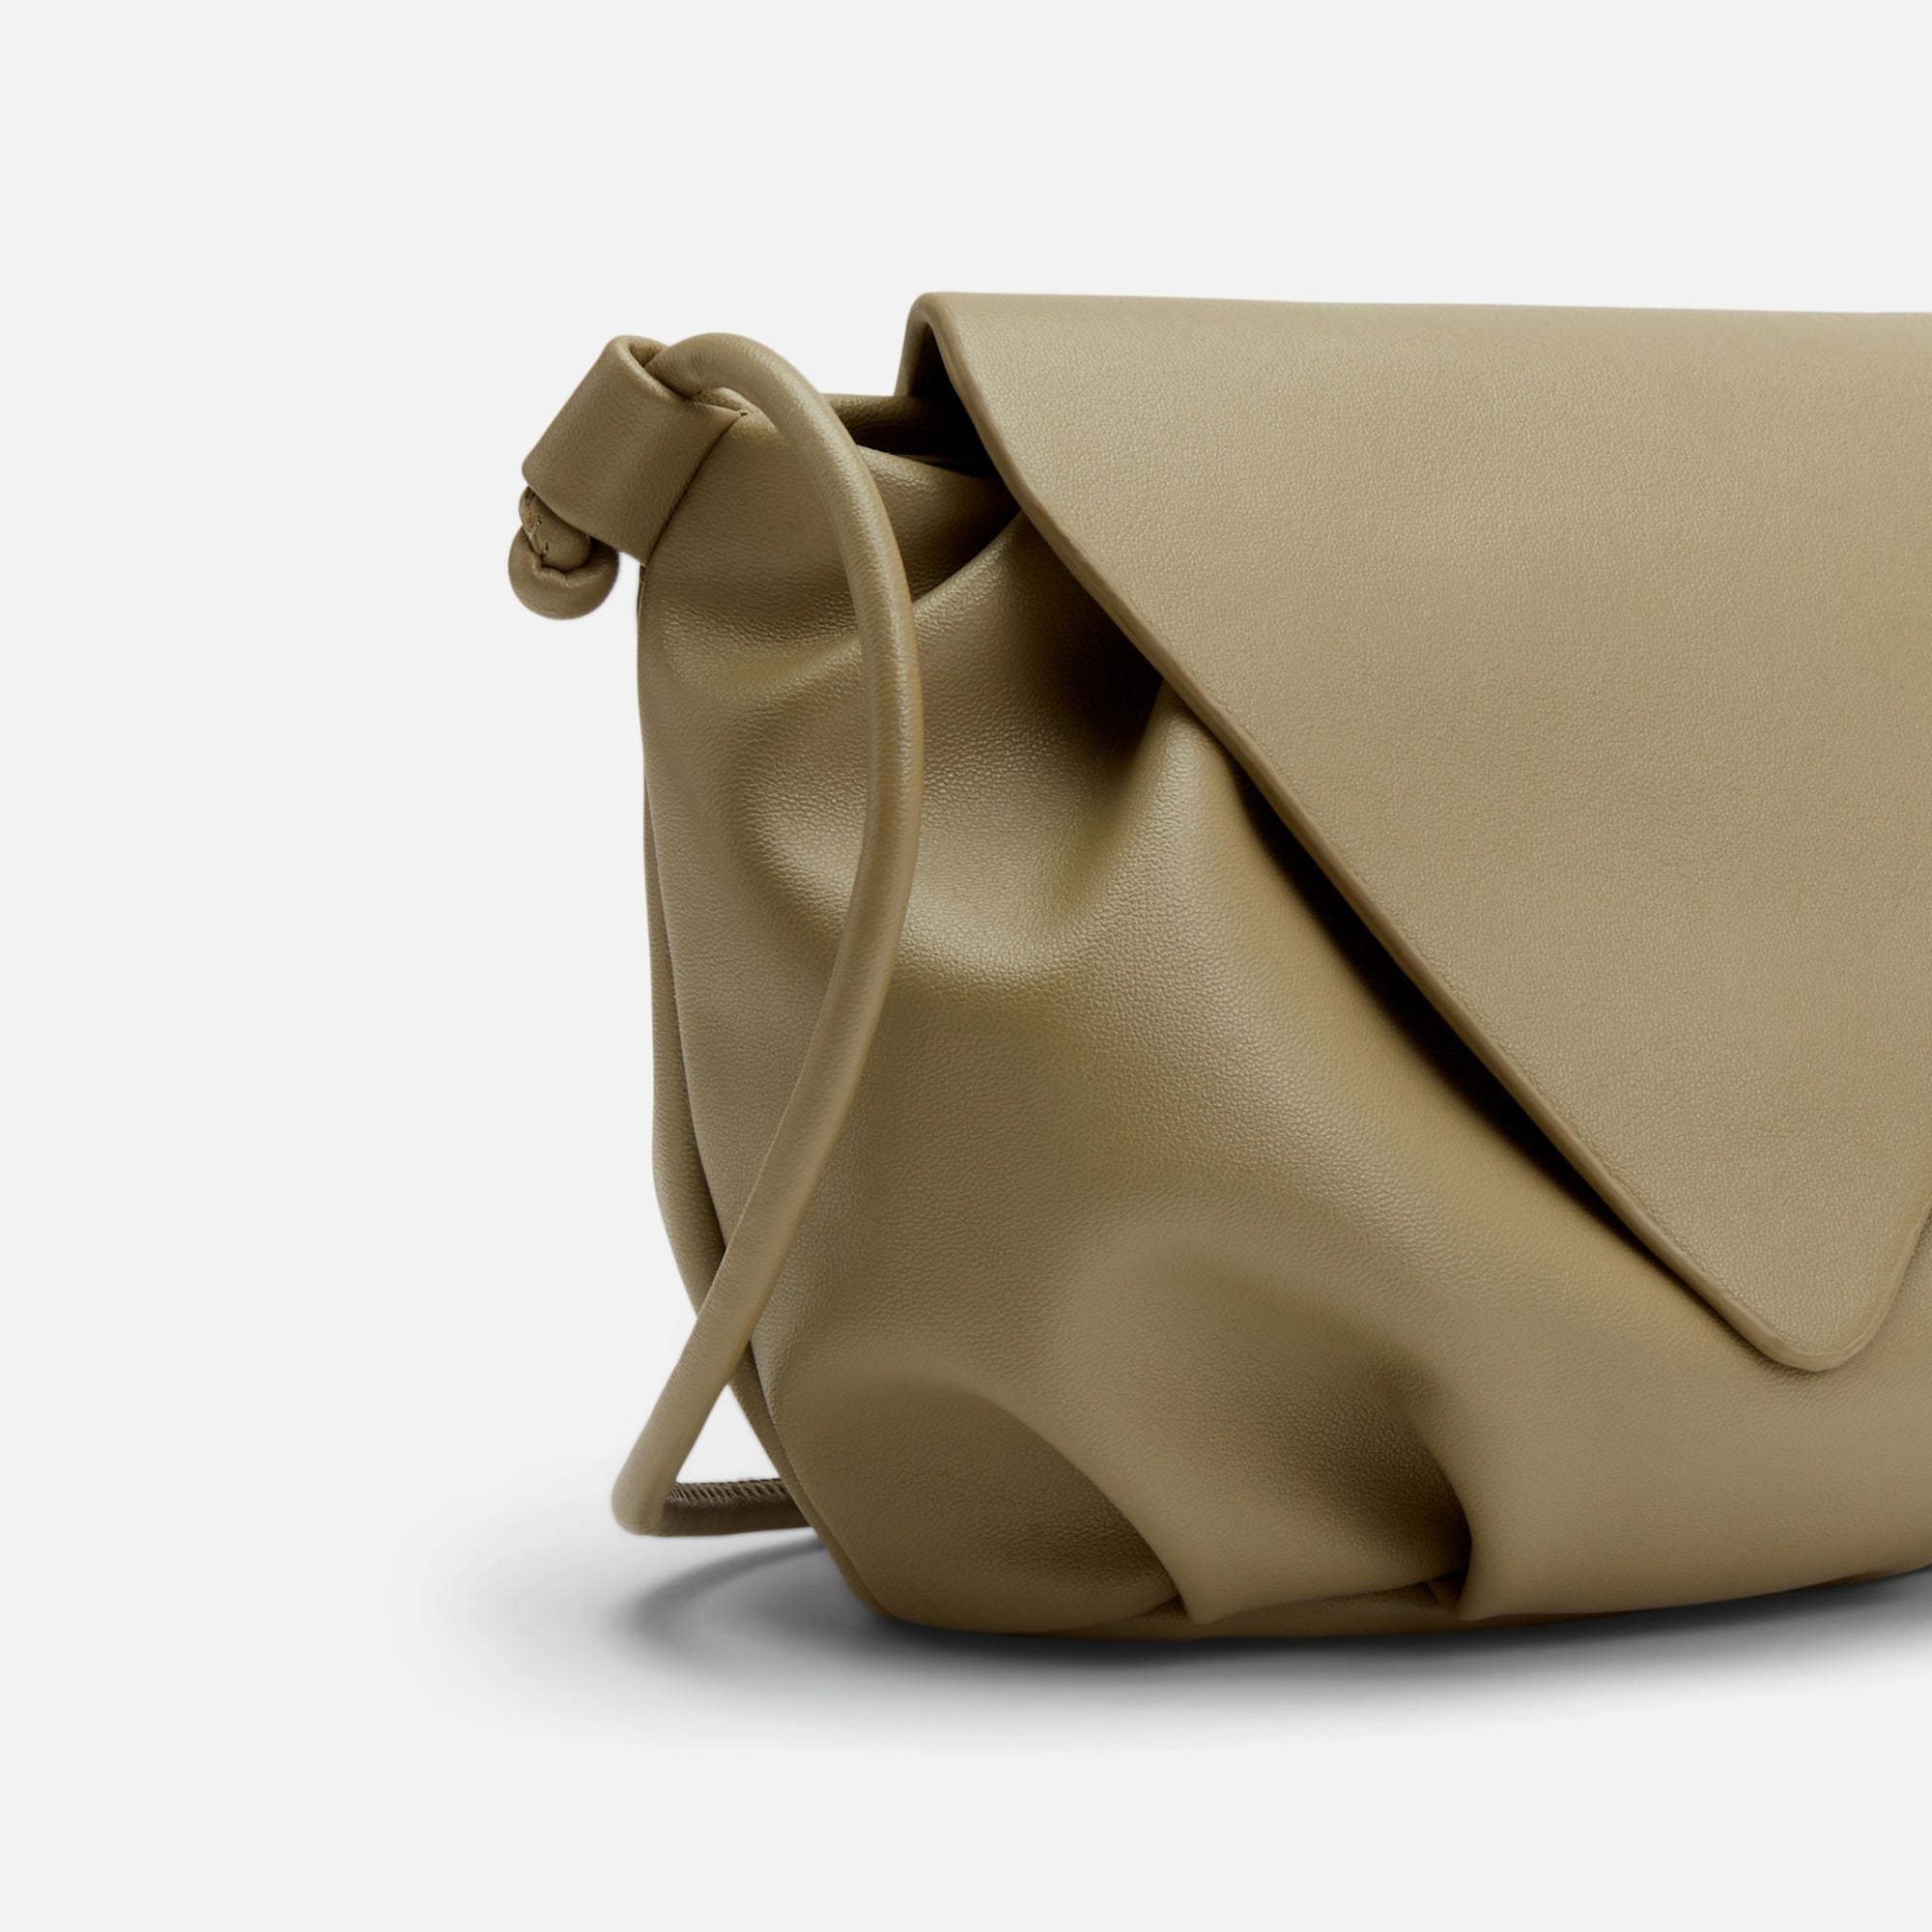 Khaki leatherette shoulder bag with triangular flap